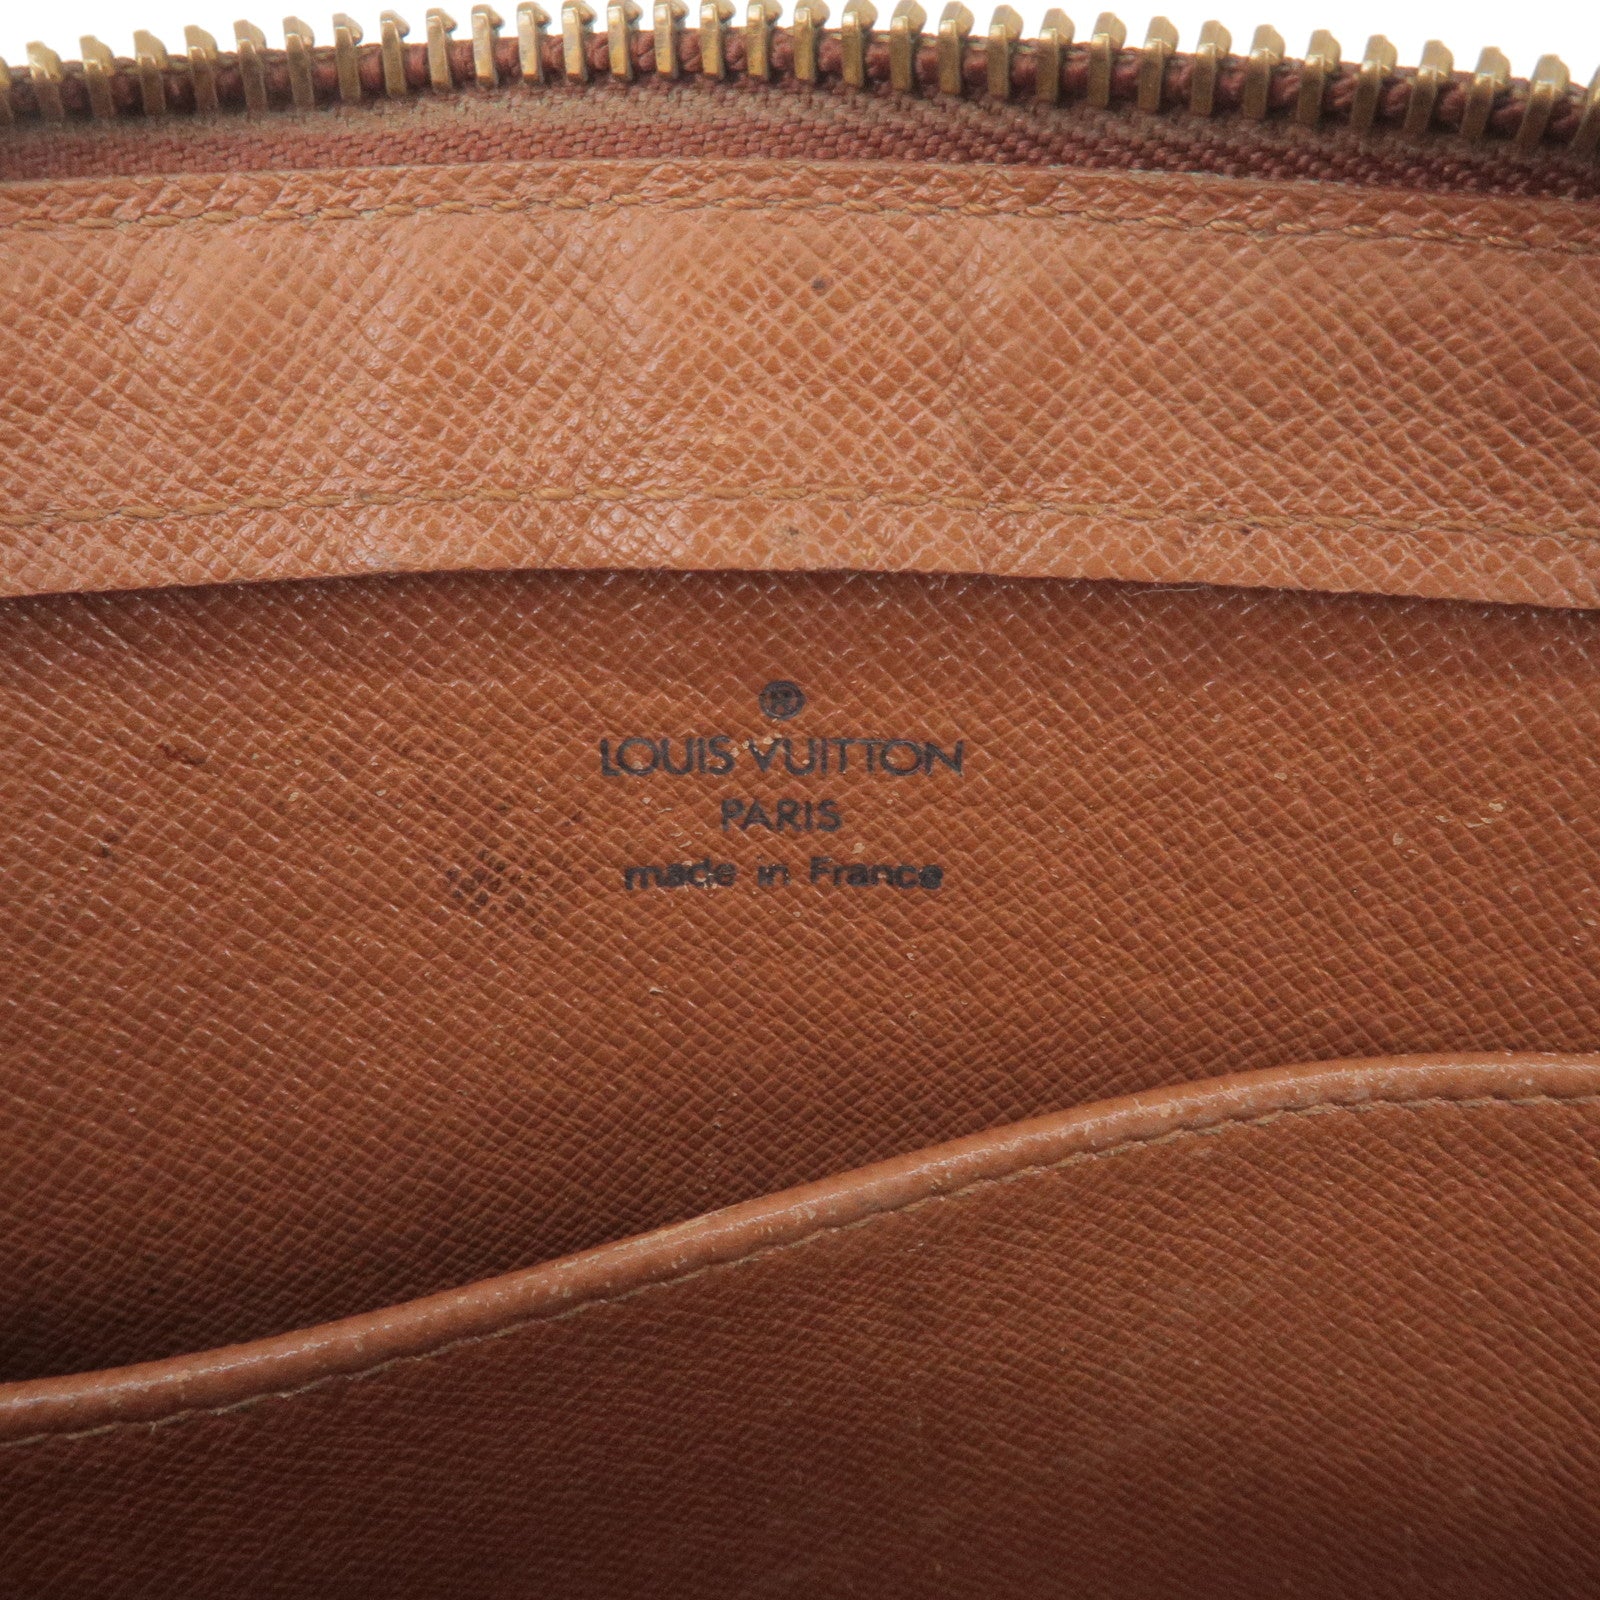 M51790 – dct - Vuitton - Monogram - ep_vintage luxury Store - Bag - Louis -  Louis Vuitton 1995 pre-owned Speedy 35 handbag - Clutch - Orsay - Pouch